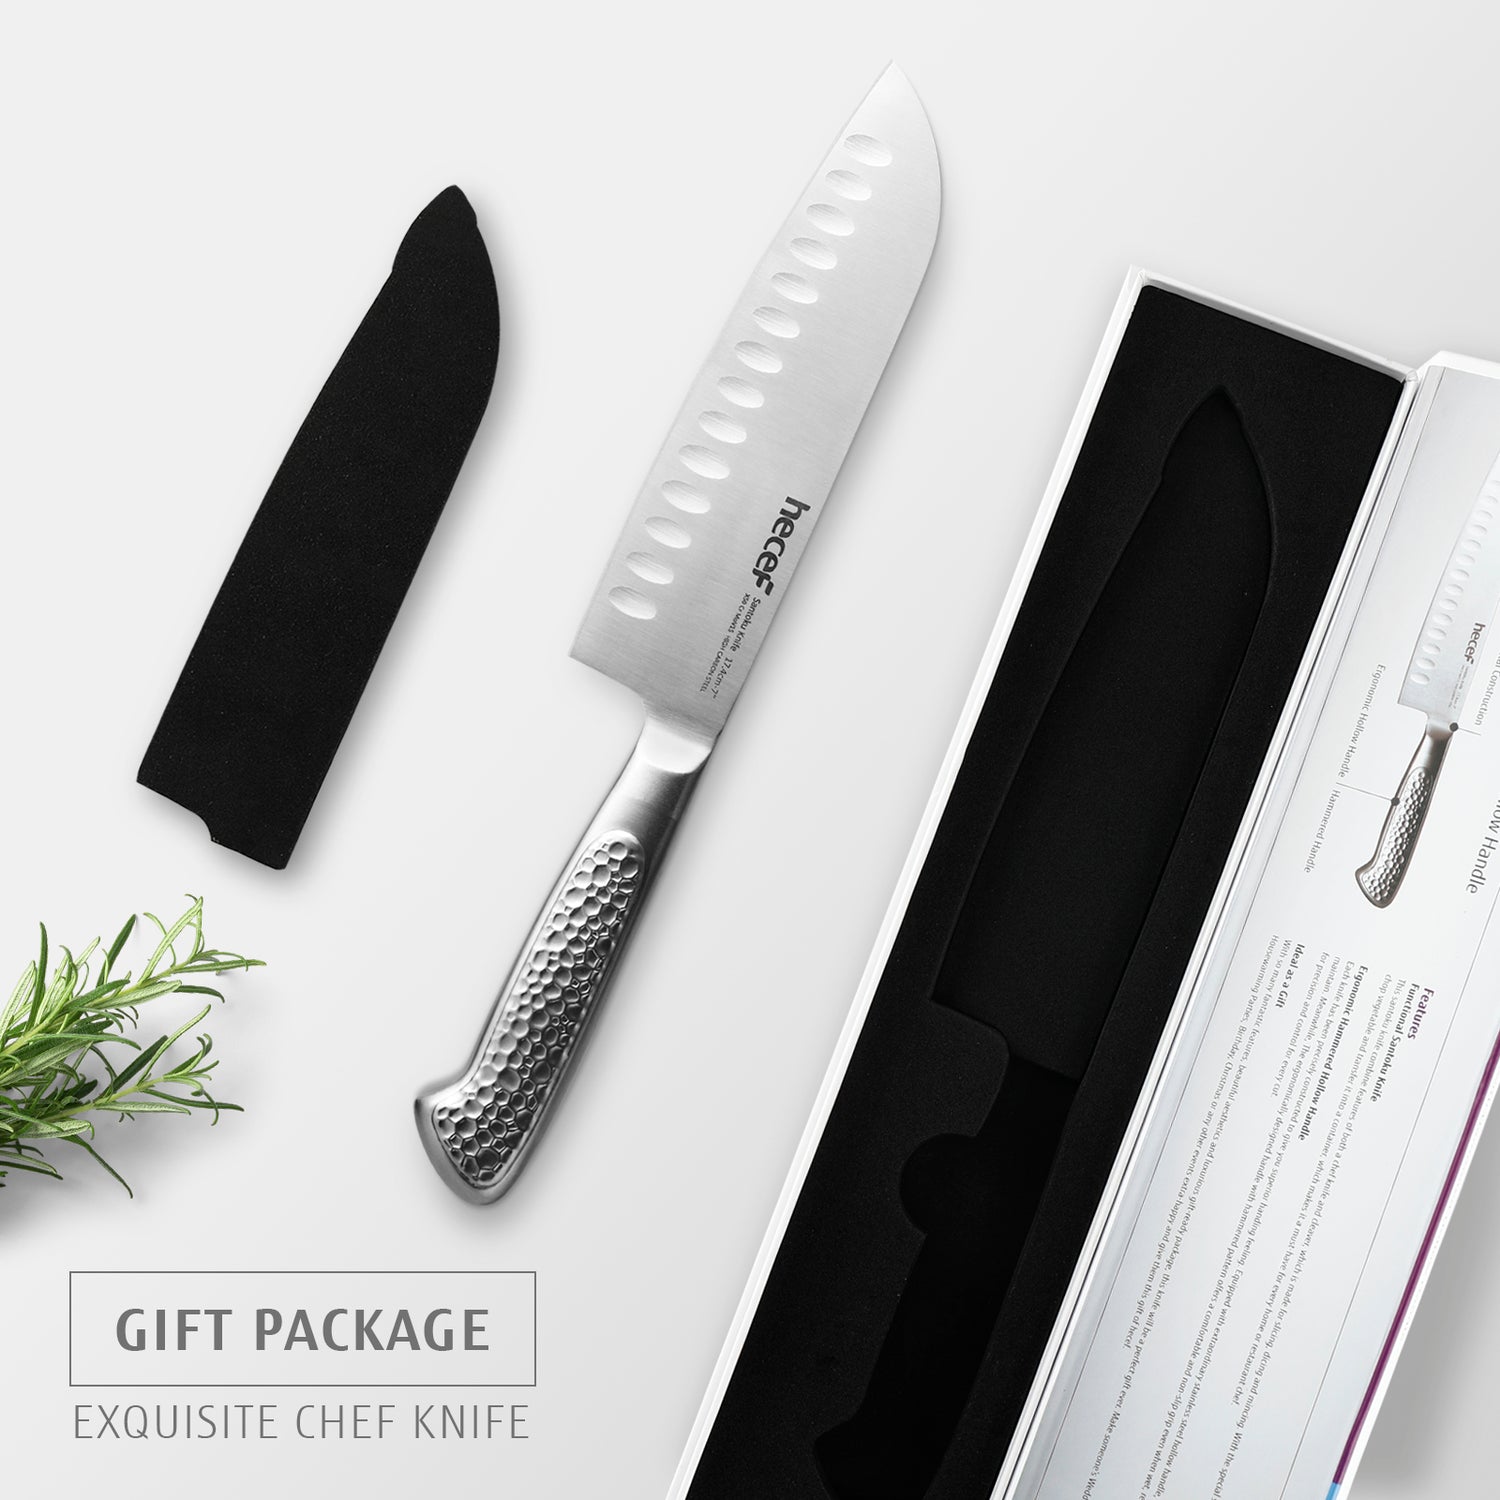 HOSHANHO 7 Inch Japanese Chef Knife, Ultra Sharp High Carbon